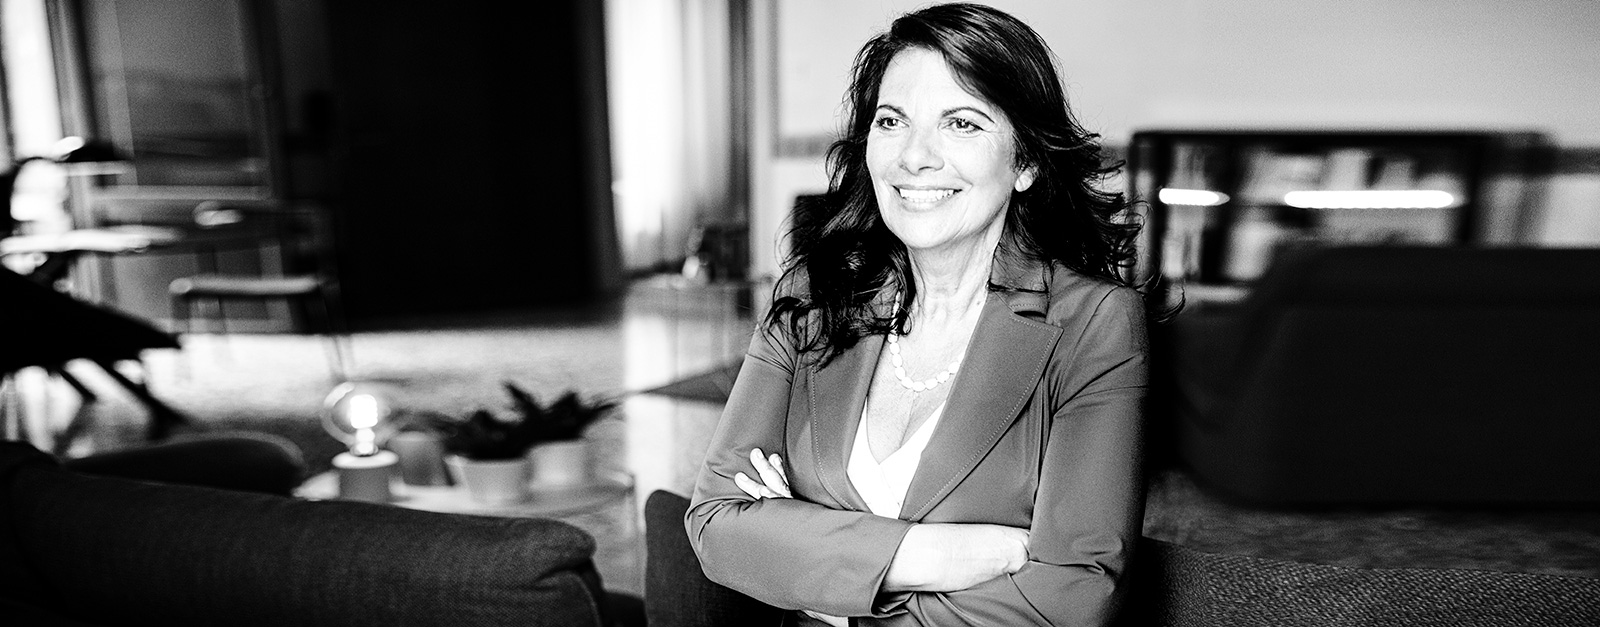 Maria Pia Favaretto: pubblicitaria, imprenditrice, docente universitaria, autrice, globetrotter